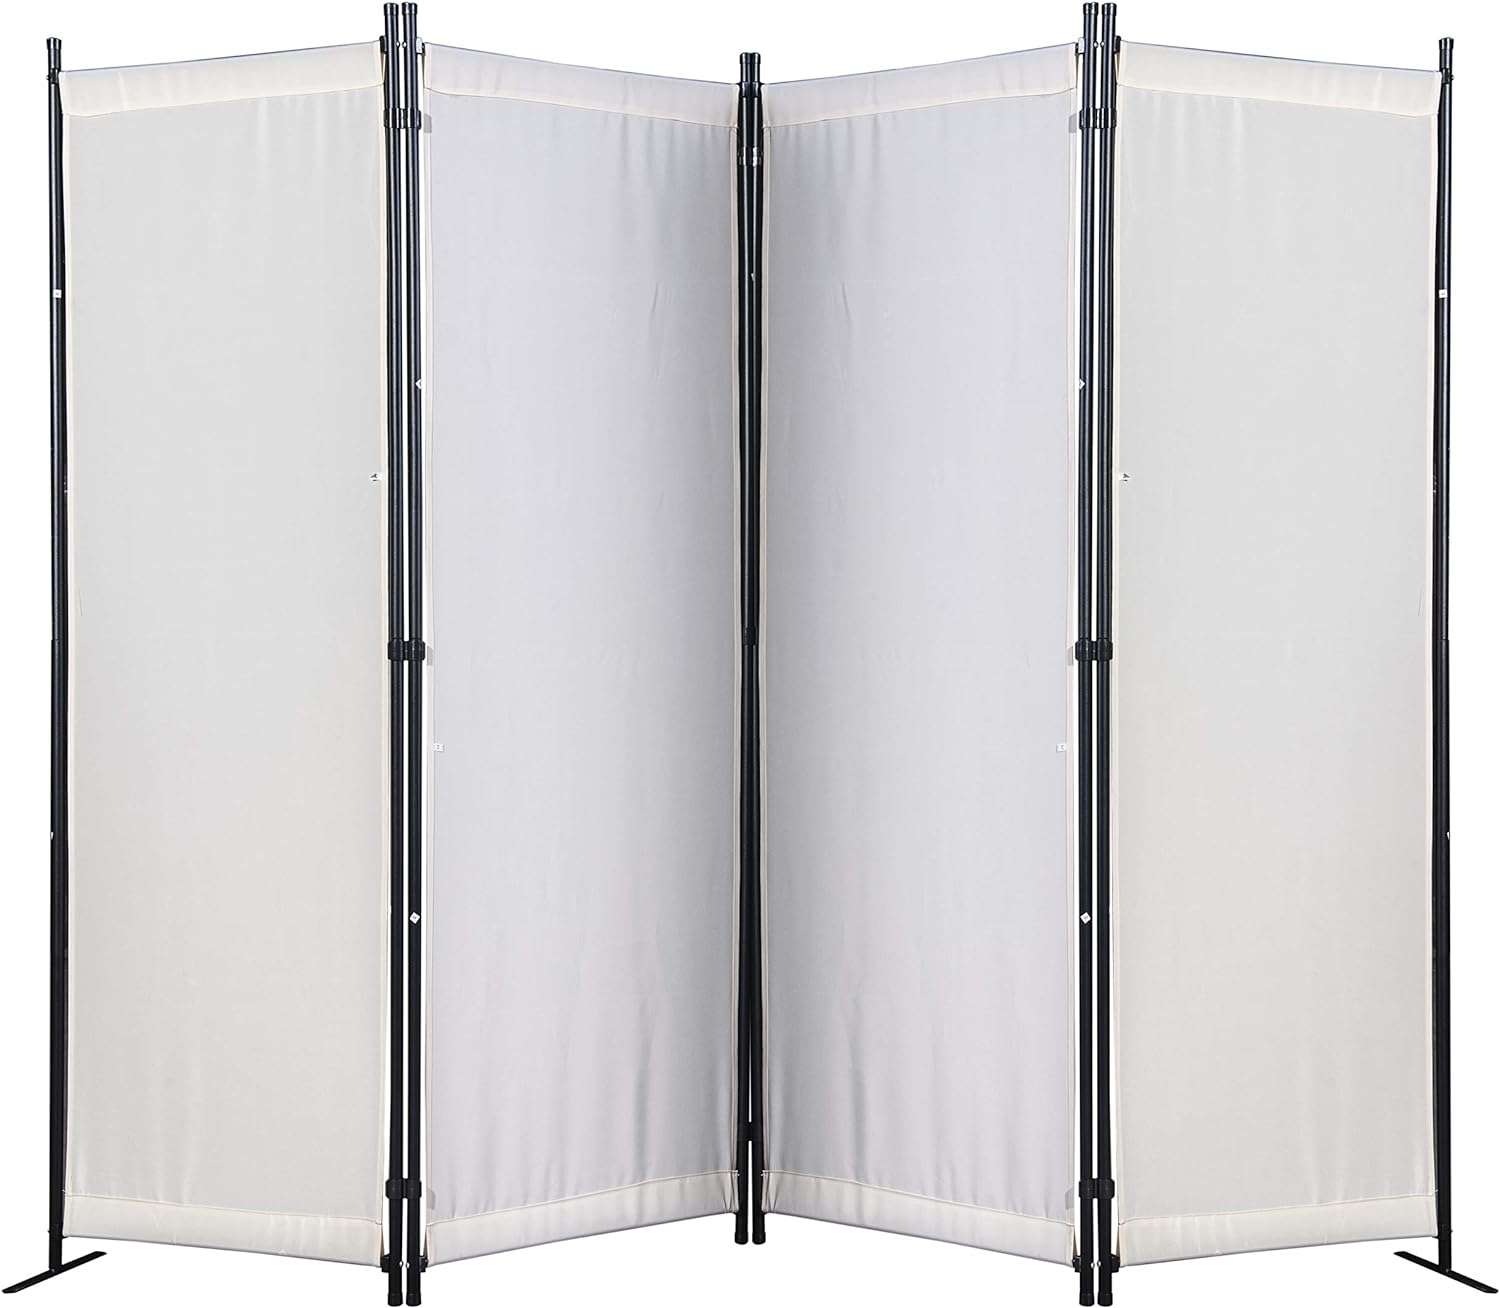 4 Panel Room Divider Folding Privacy Screen Room Dorm Decor Office Divider 